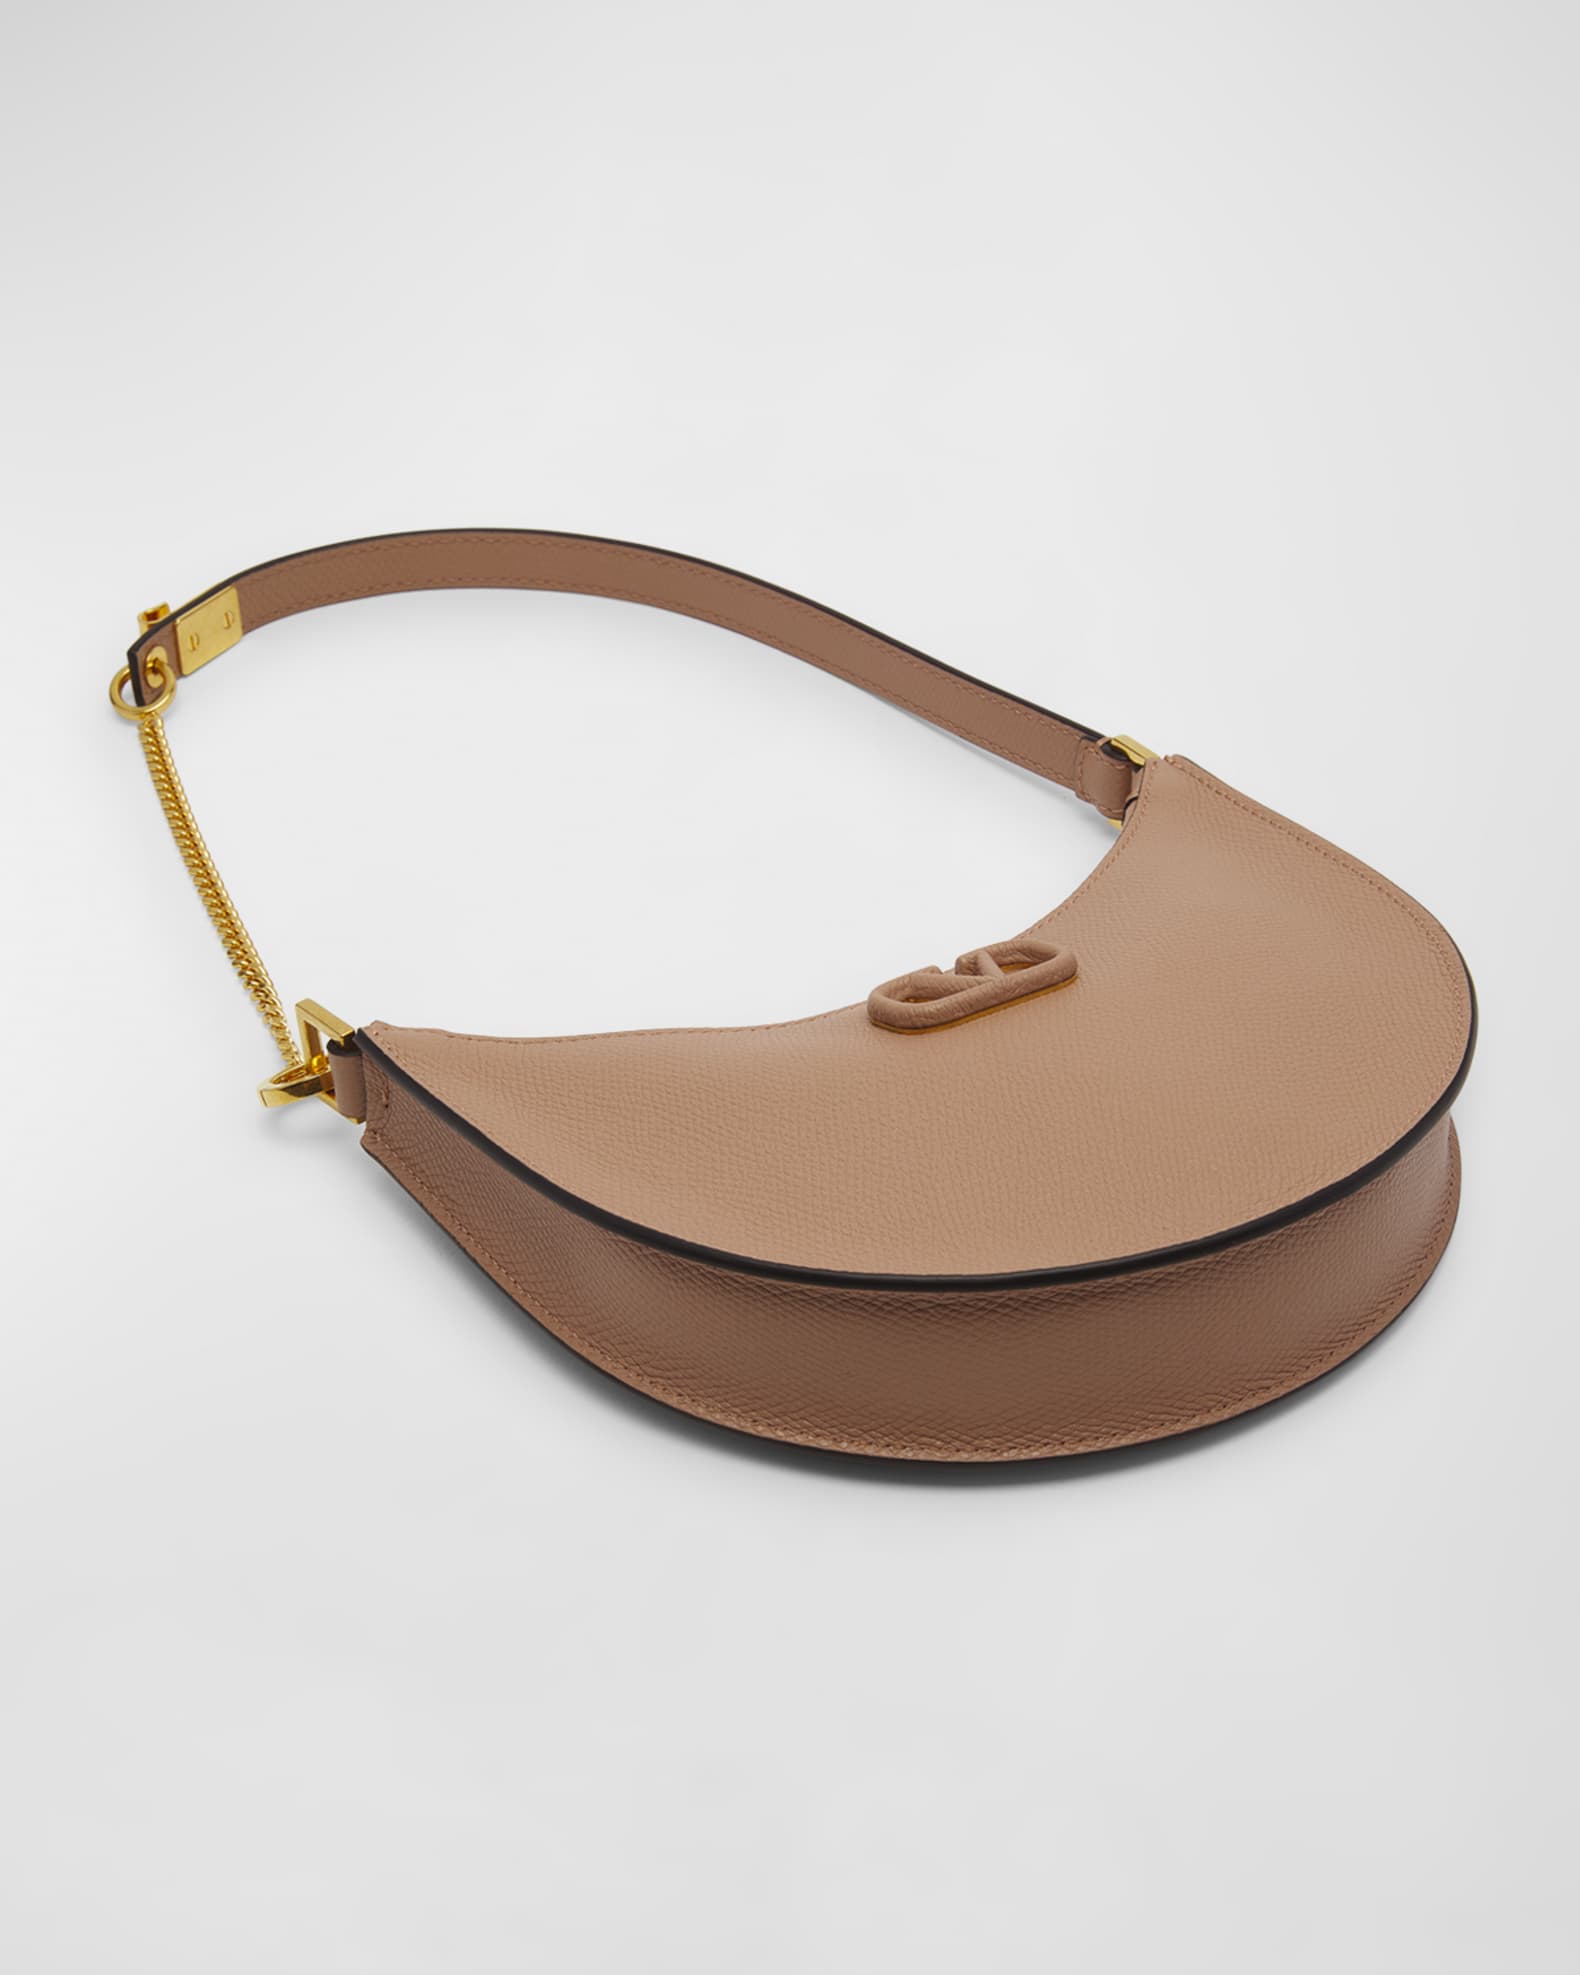 V Logo Signature Mini Leather Shoulder Bag in Gold - Valentino